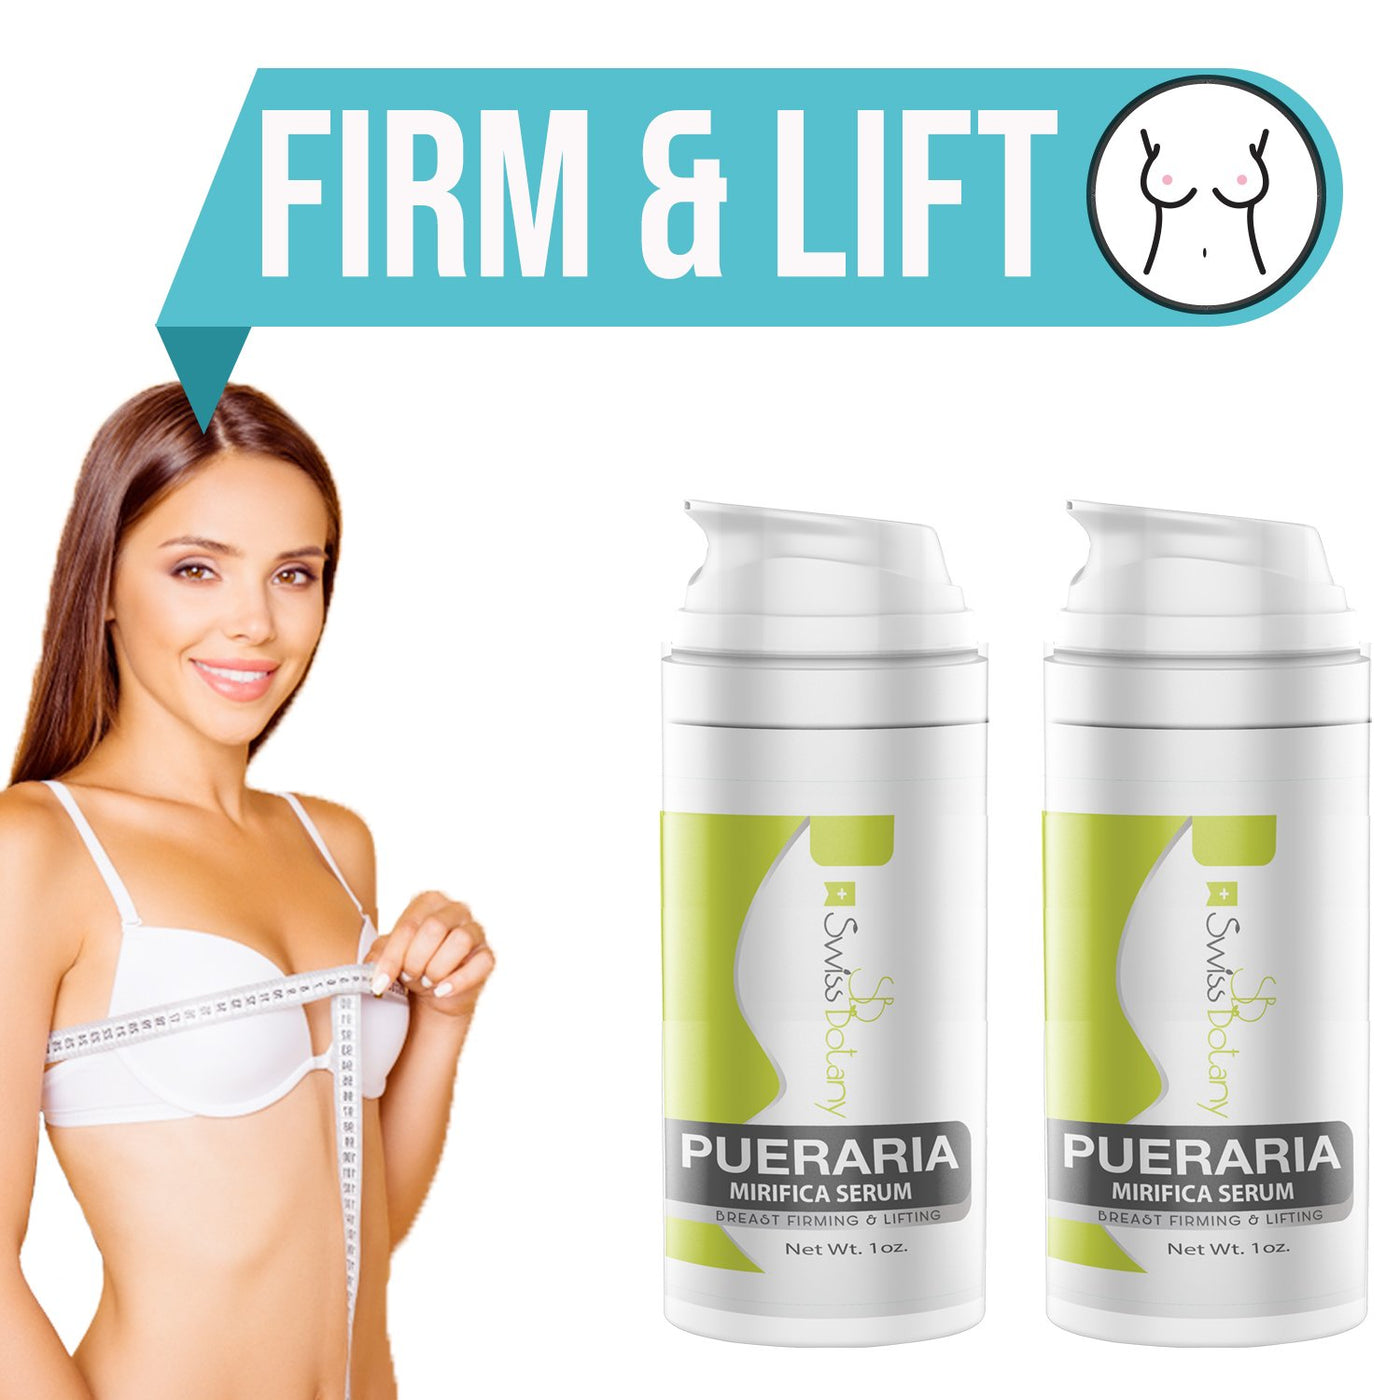 swissbotany Beauty Pueraria-Mirifica Breast Enhancement Massage Oil (2 Bottles * 1 Month Supply)